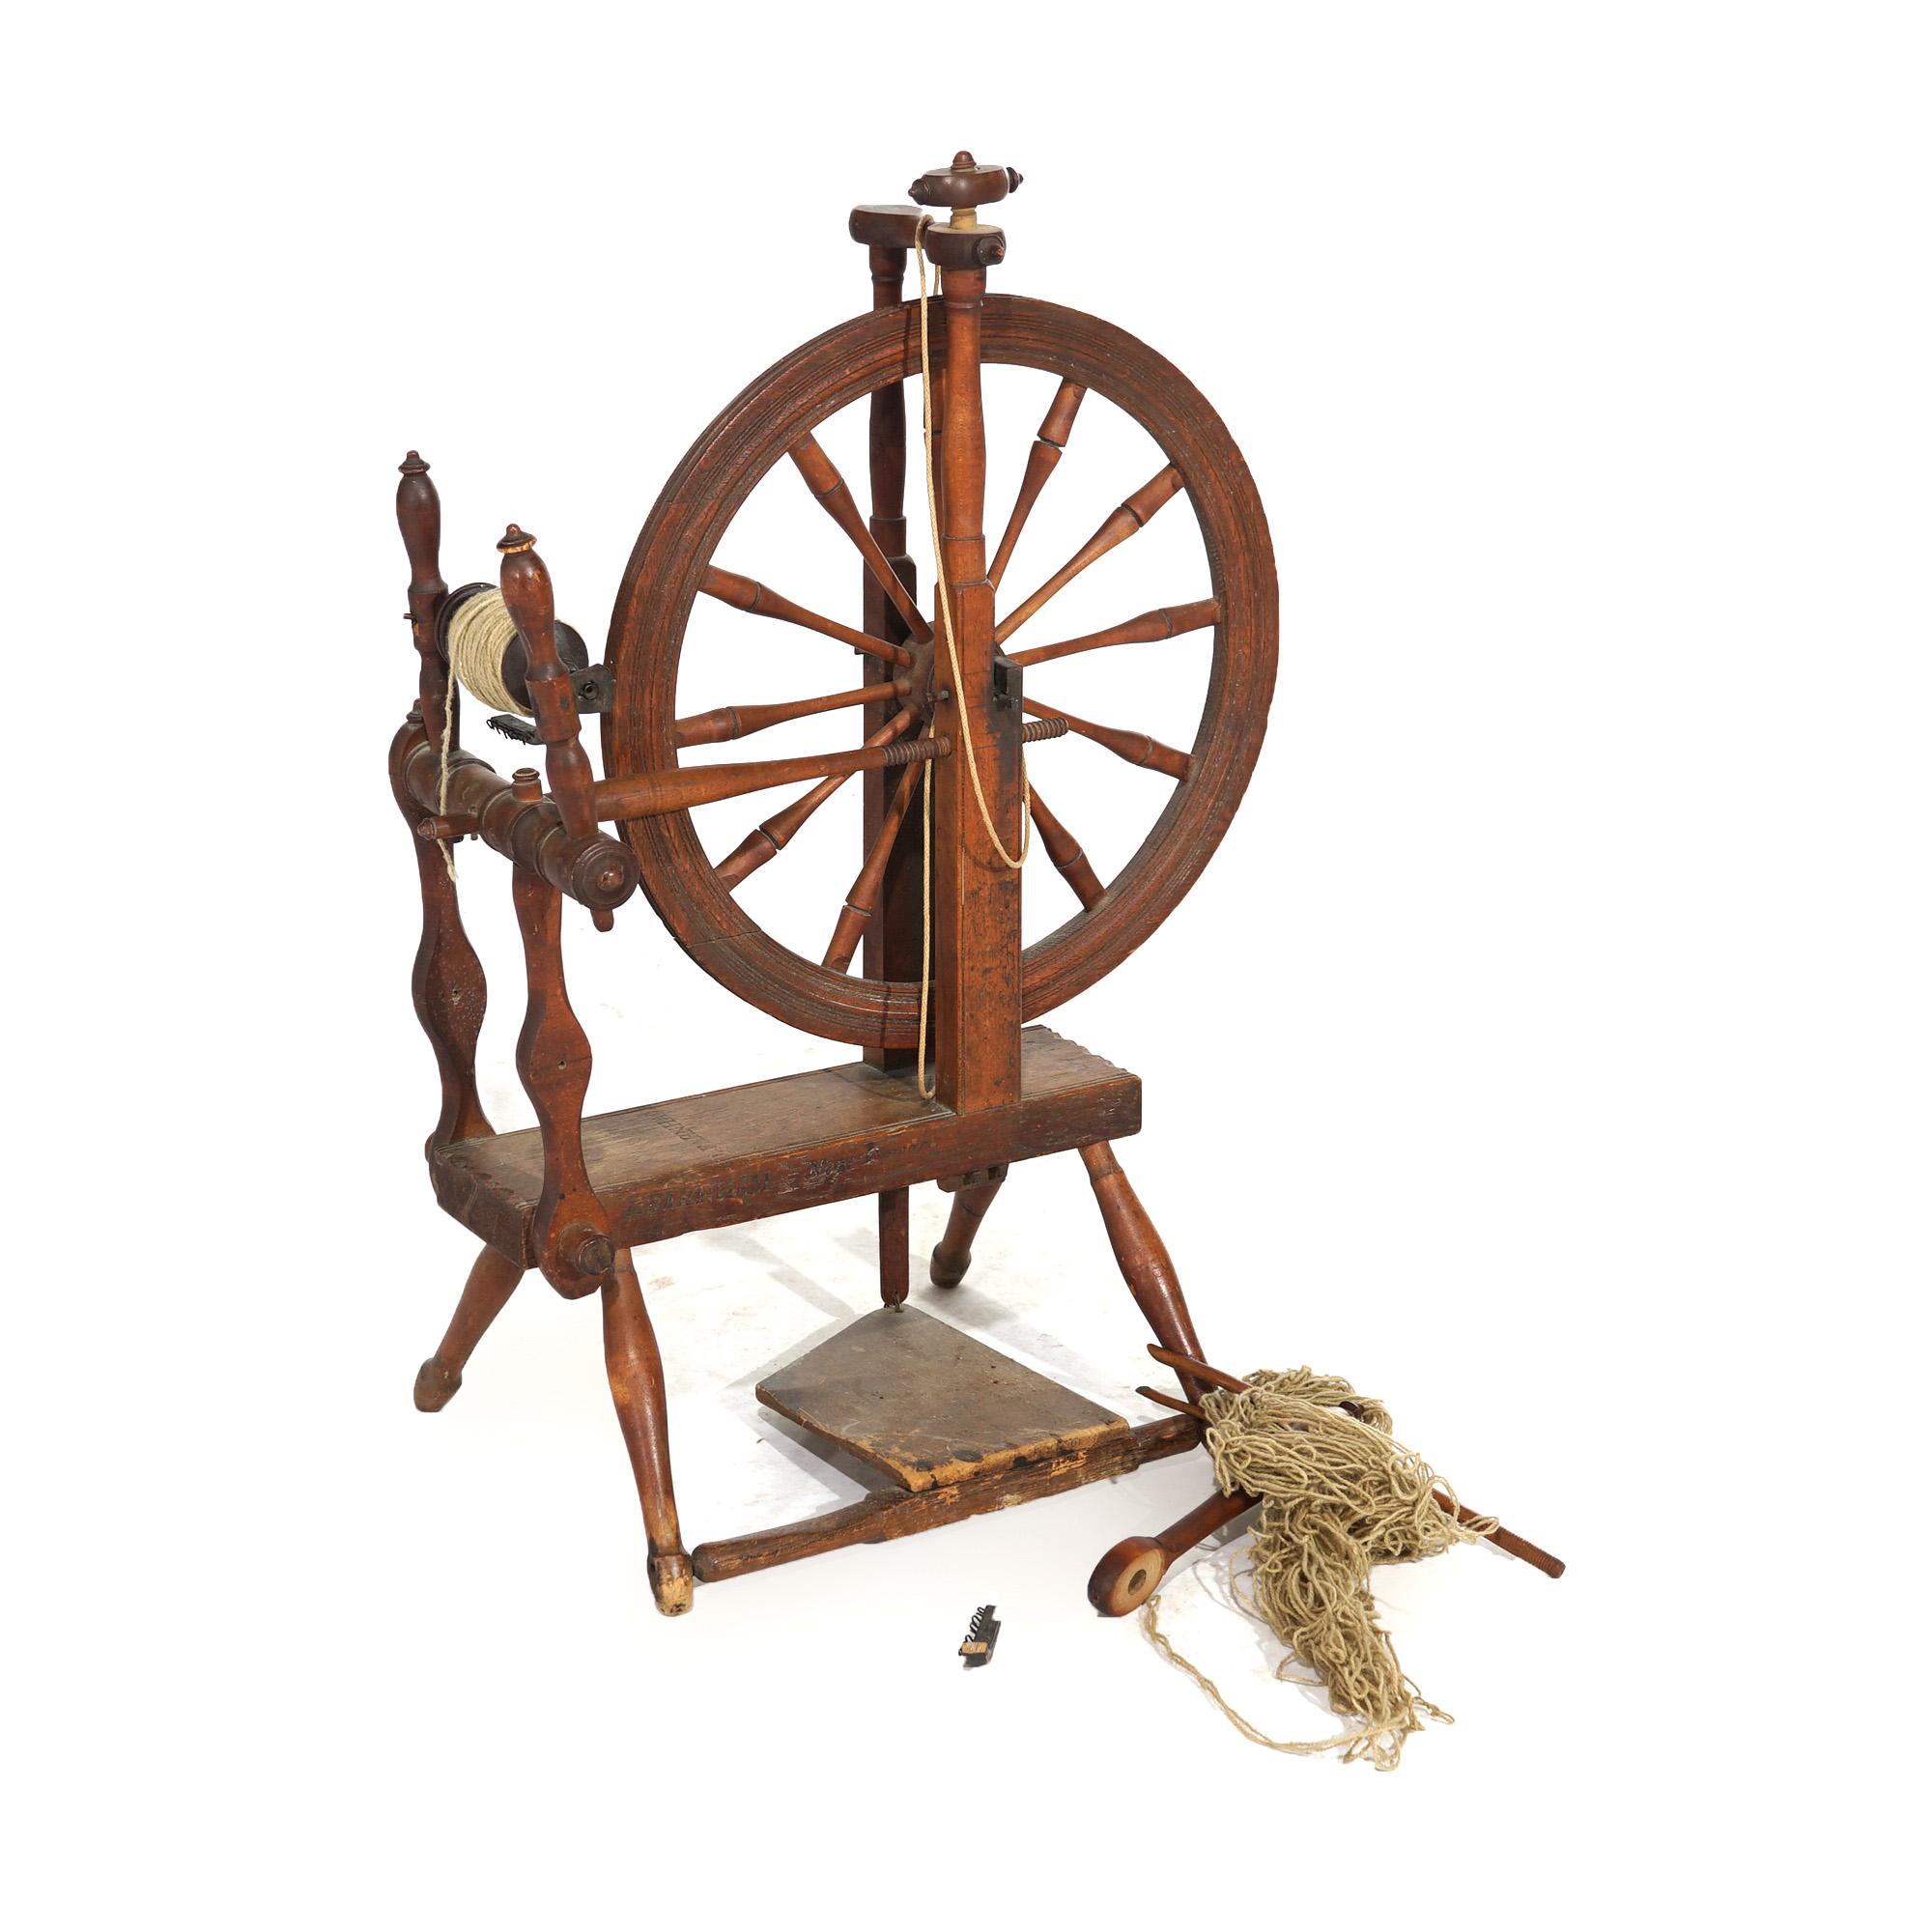 Antique Farnham Spinning Wheel, Signed, 19th C

Measures - 34.5